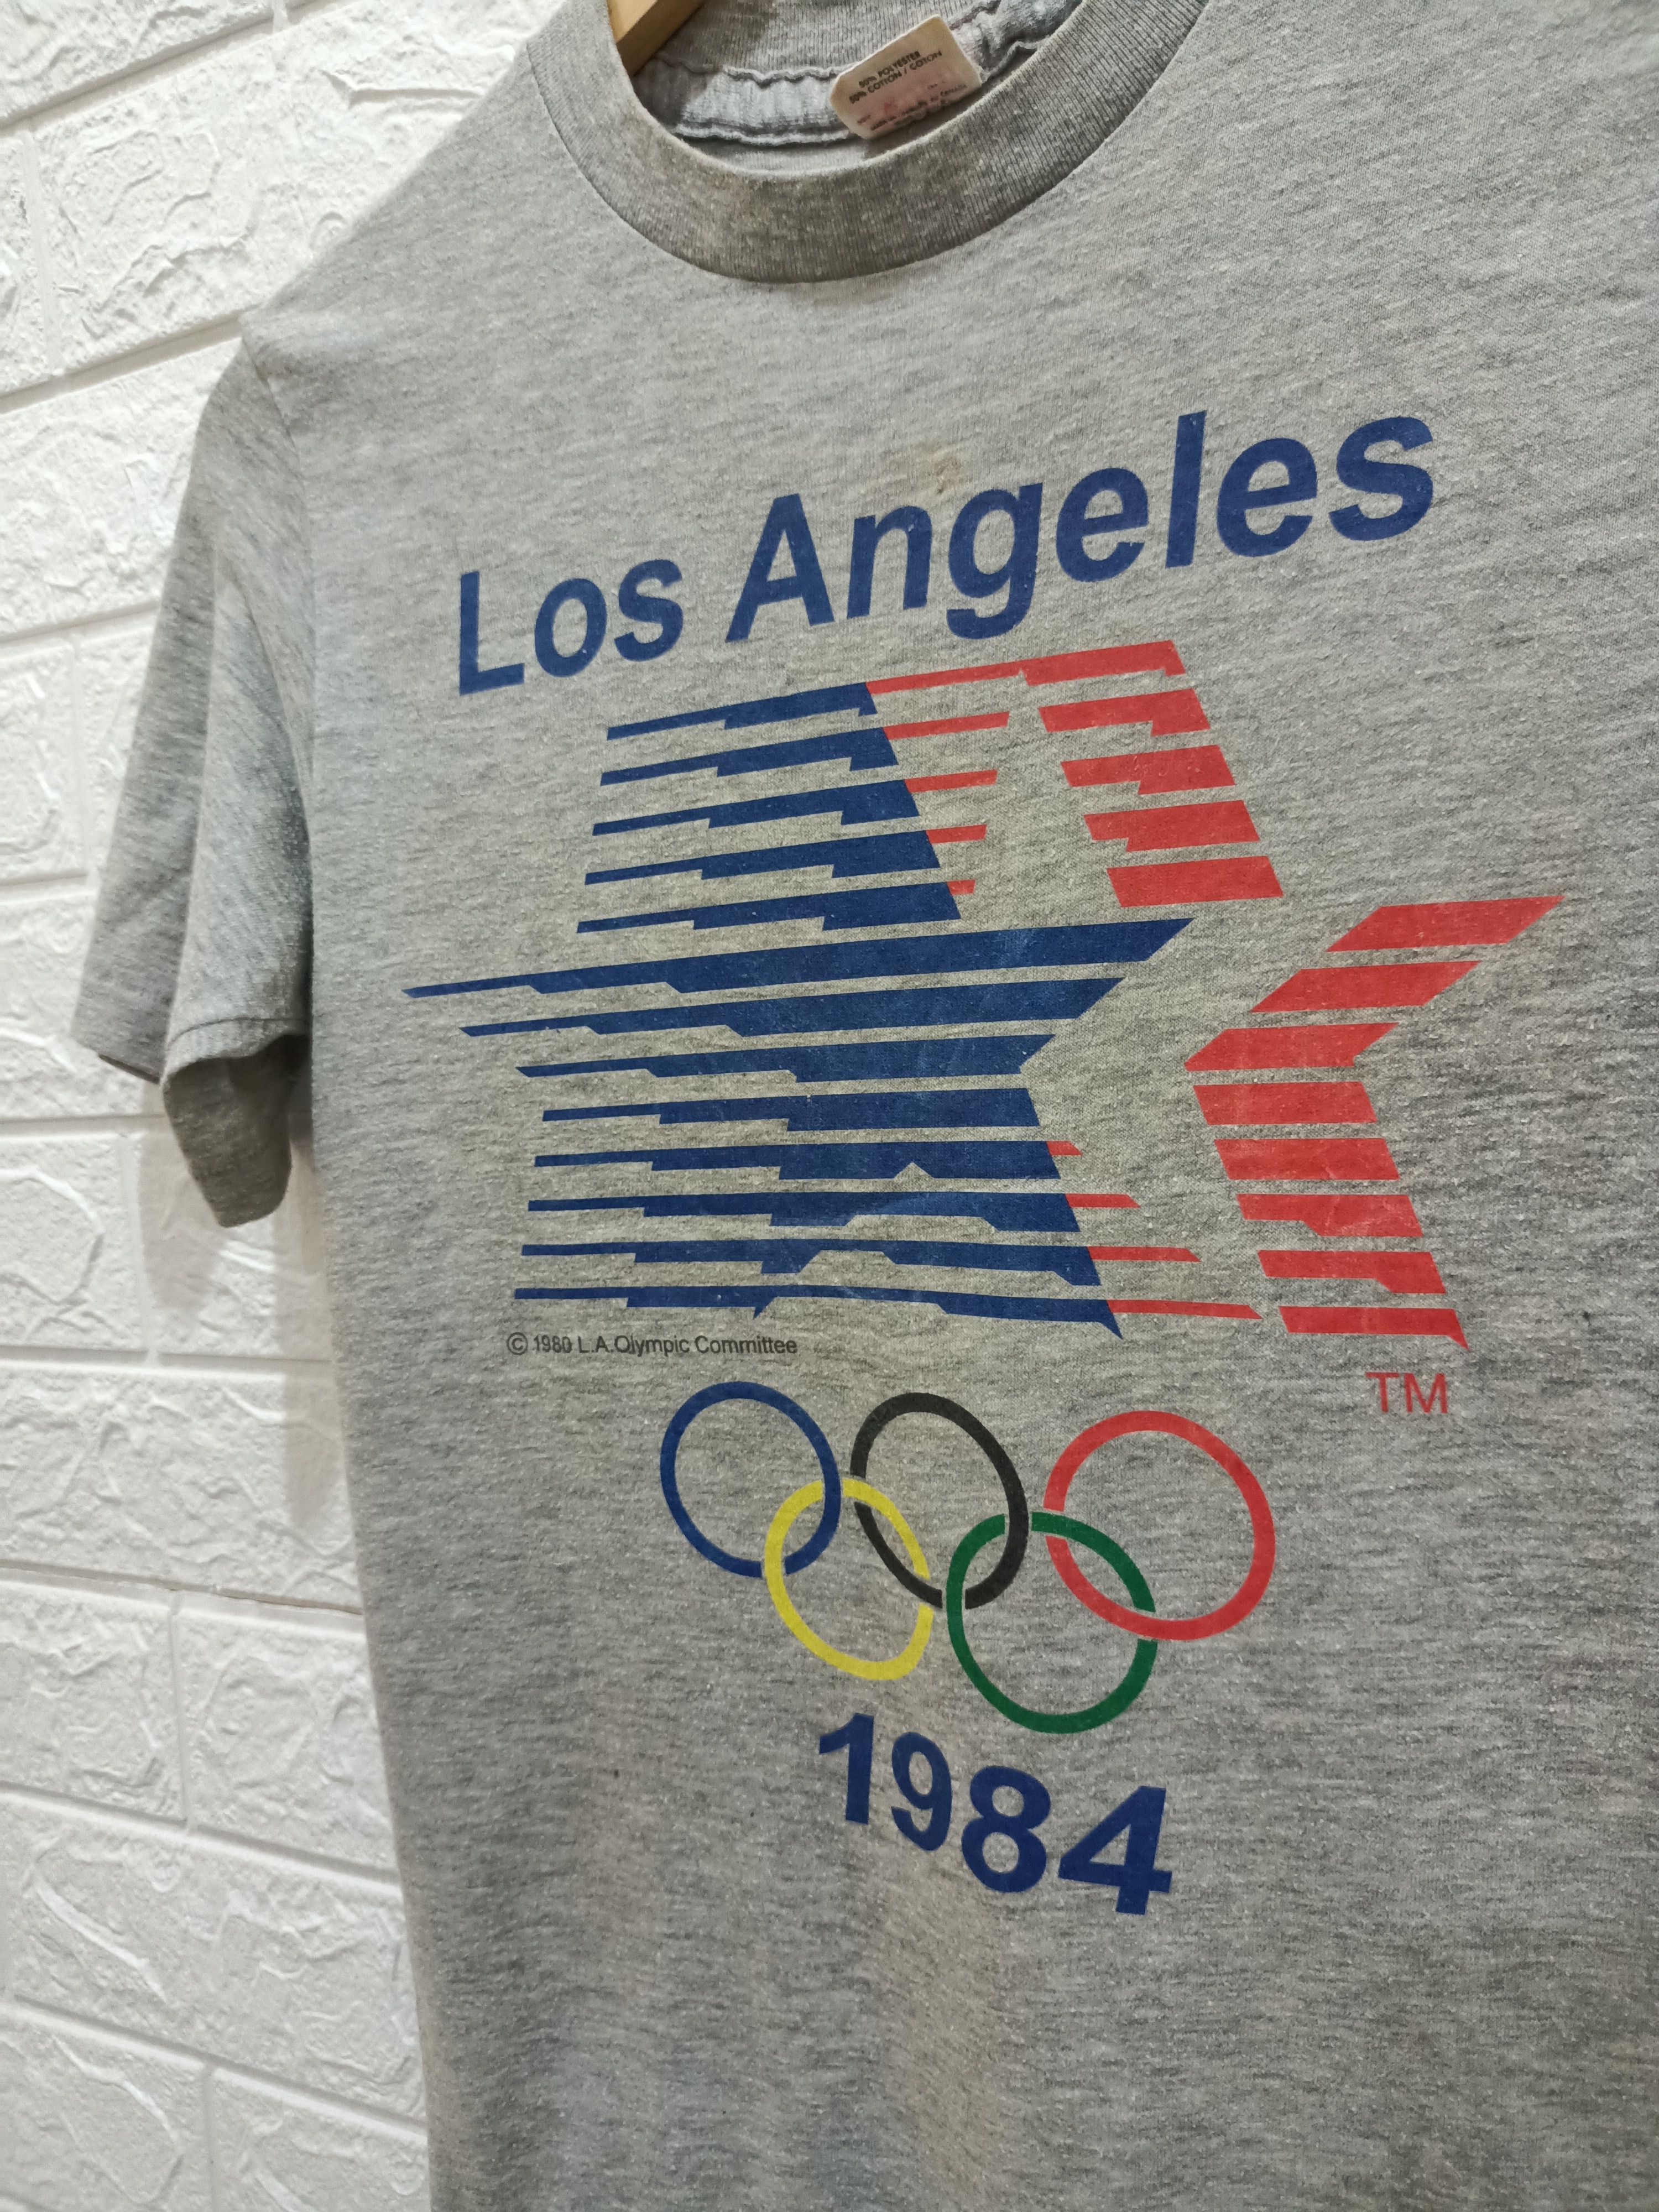 Rare Vintage 1984 Olympics Los Angeles Graphic Tee - 6